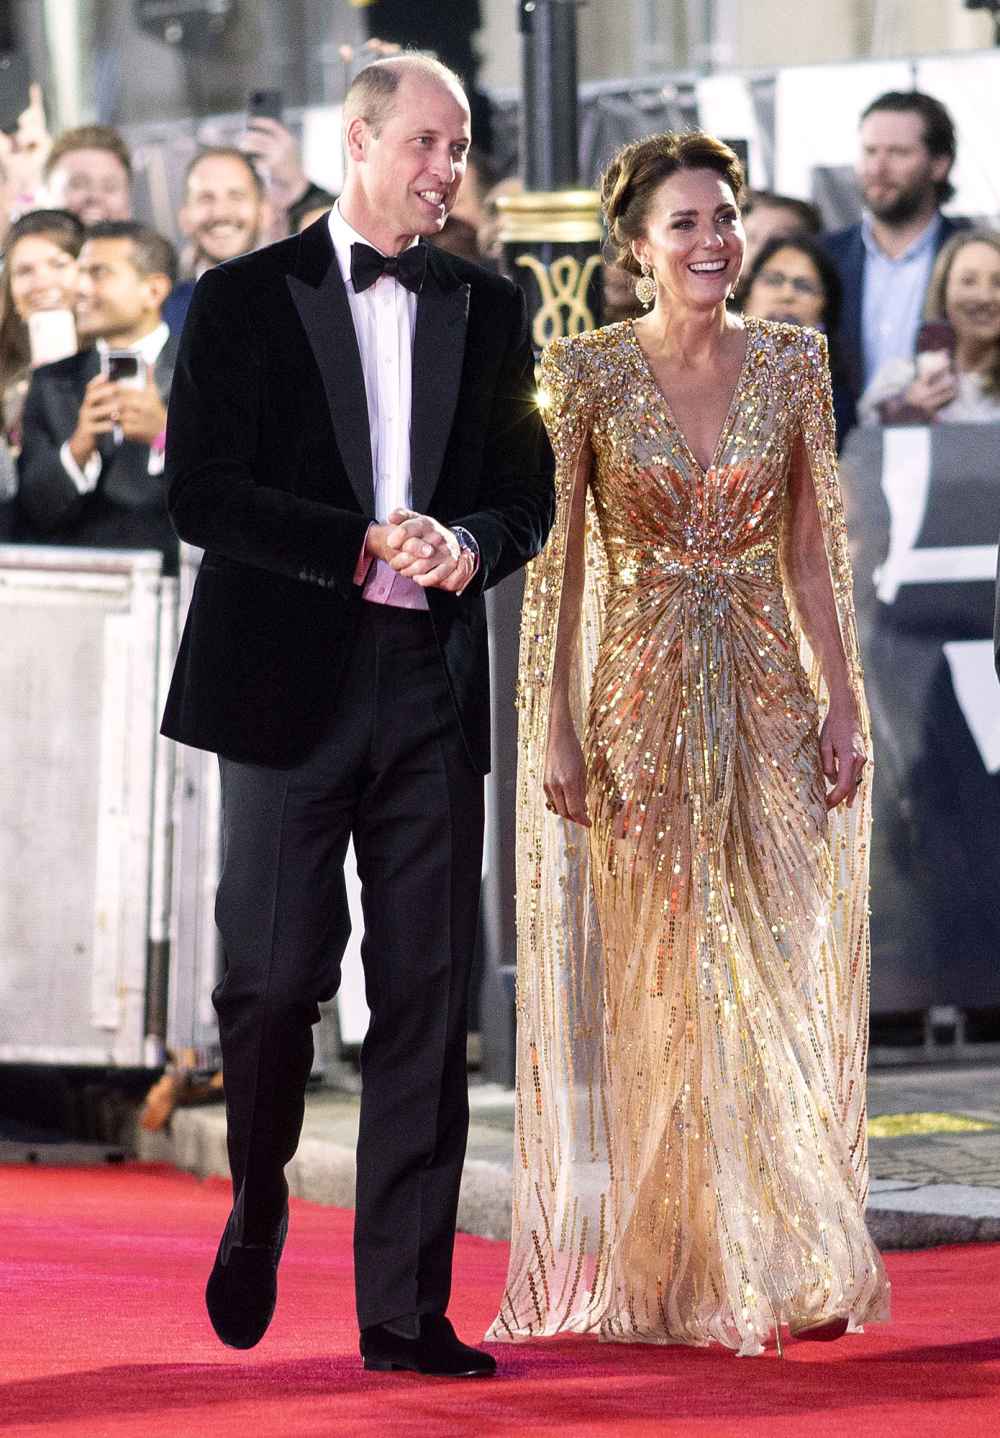 Kate Middleton’s Dress Honors Princess Diana’s 1985 ‘Bond’ Look